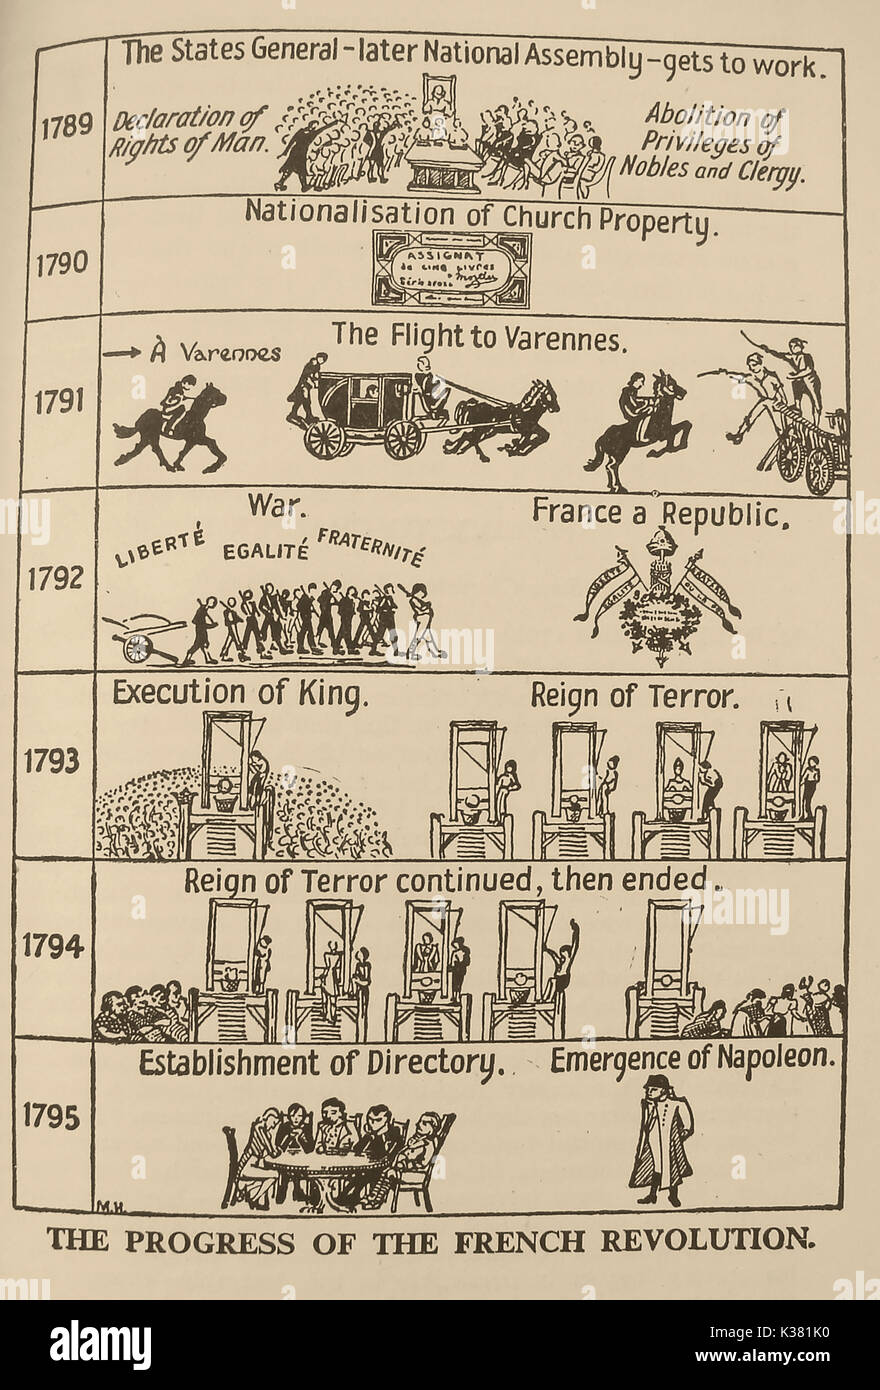 French Revolution Timeline For Kids